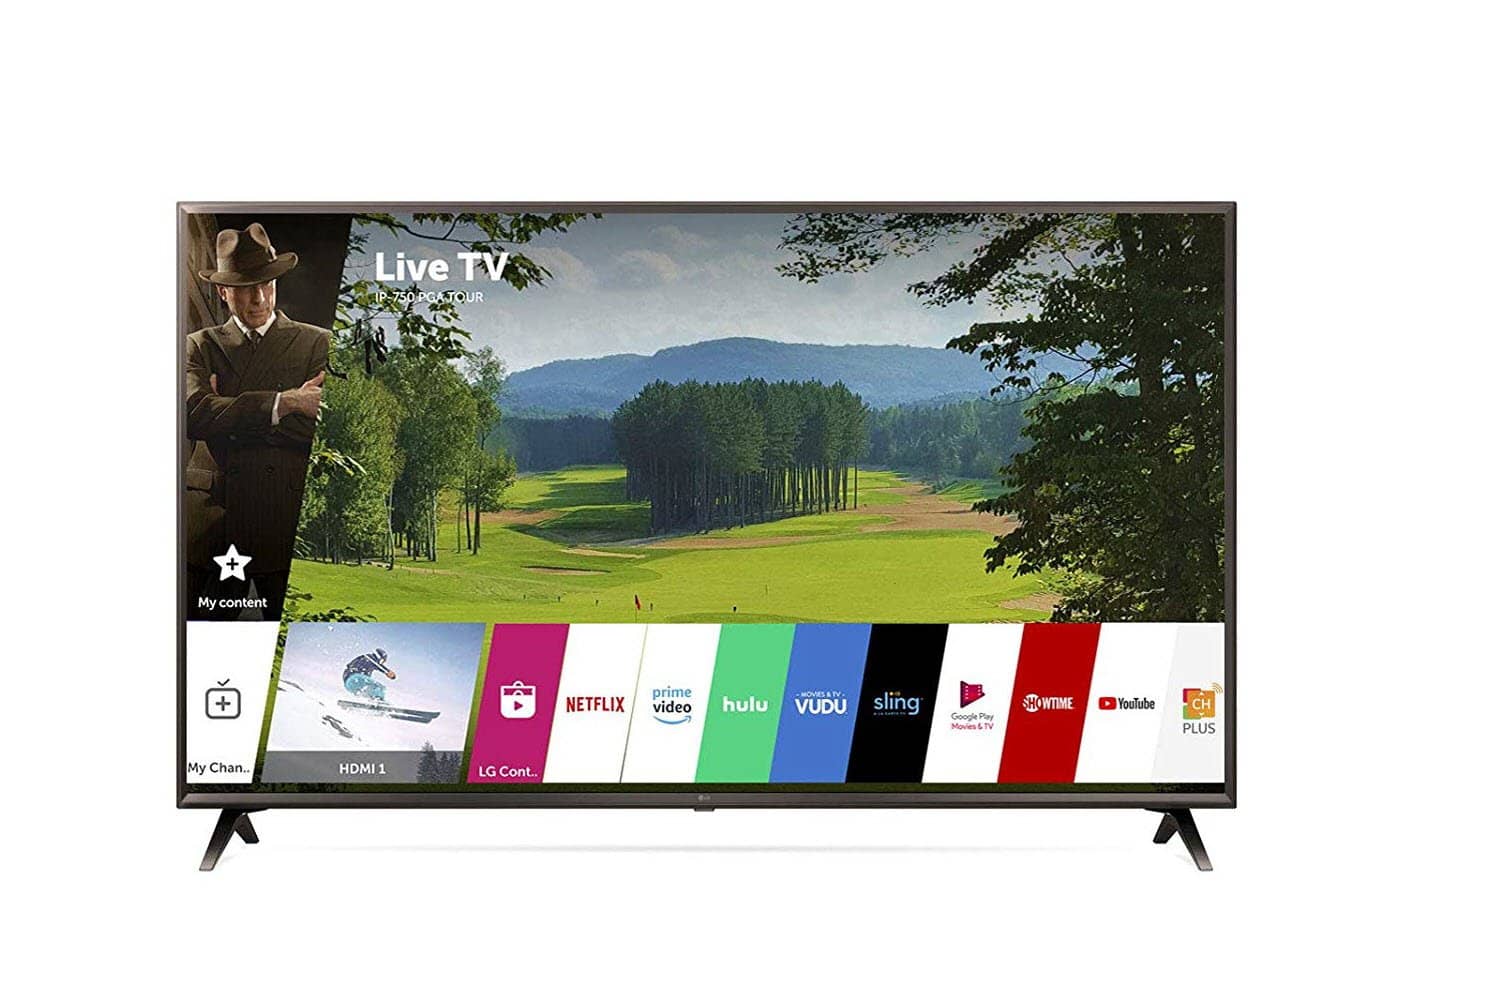 LG Electronics 65UK6300PUE 65-Inch 4K Ultra HD Smart TV